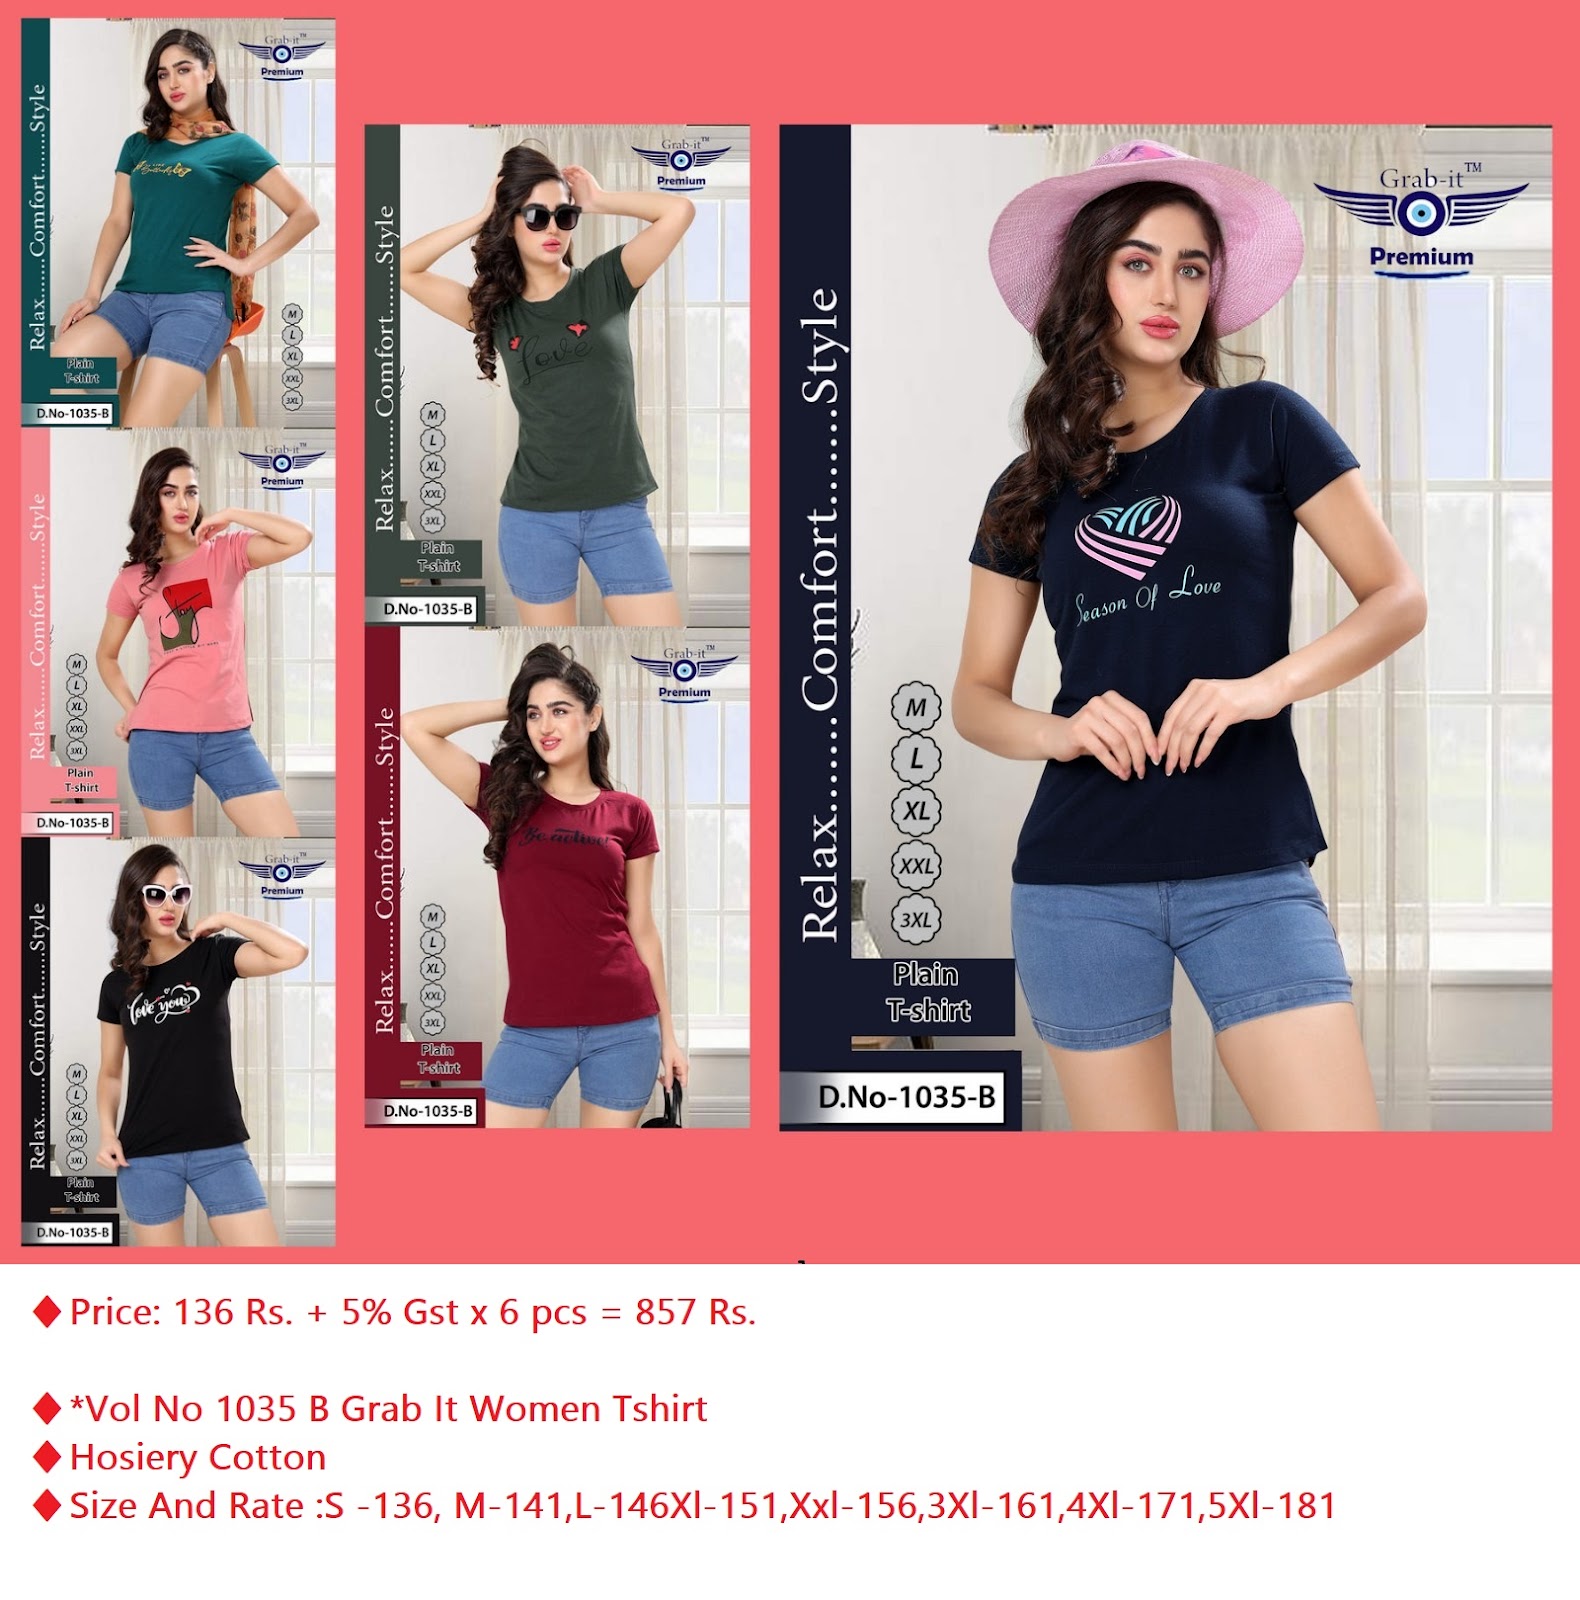 Vol No 1035 B Grab It Women Tshirt Manufacturer Wholesaler